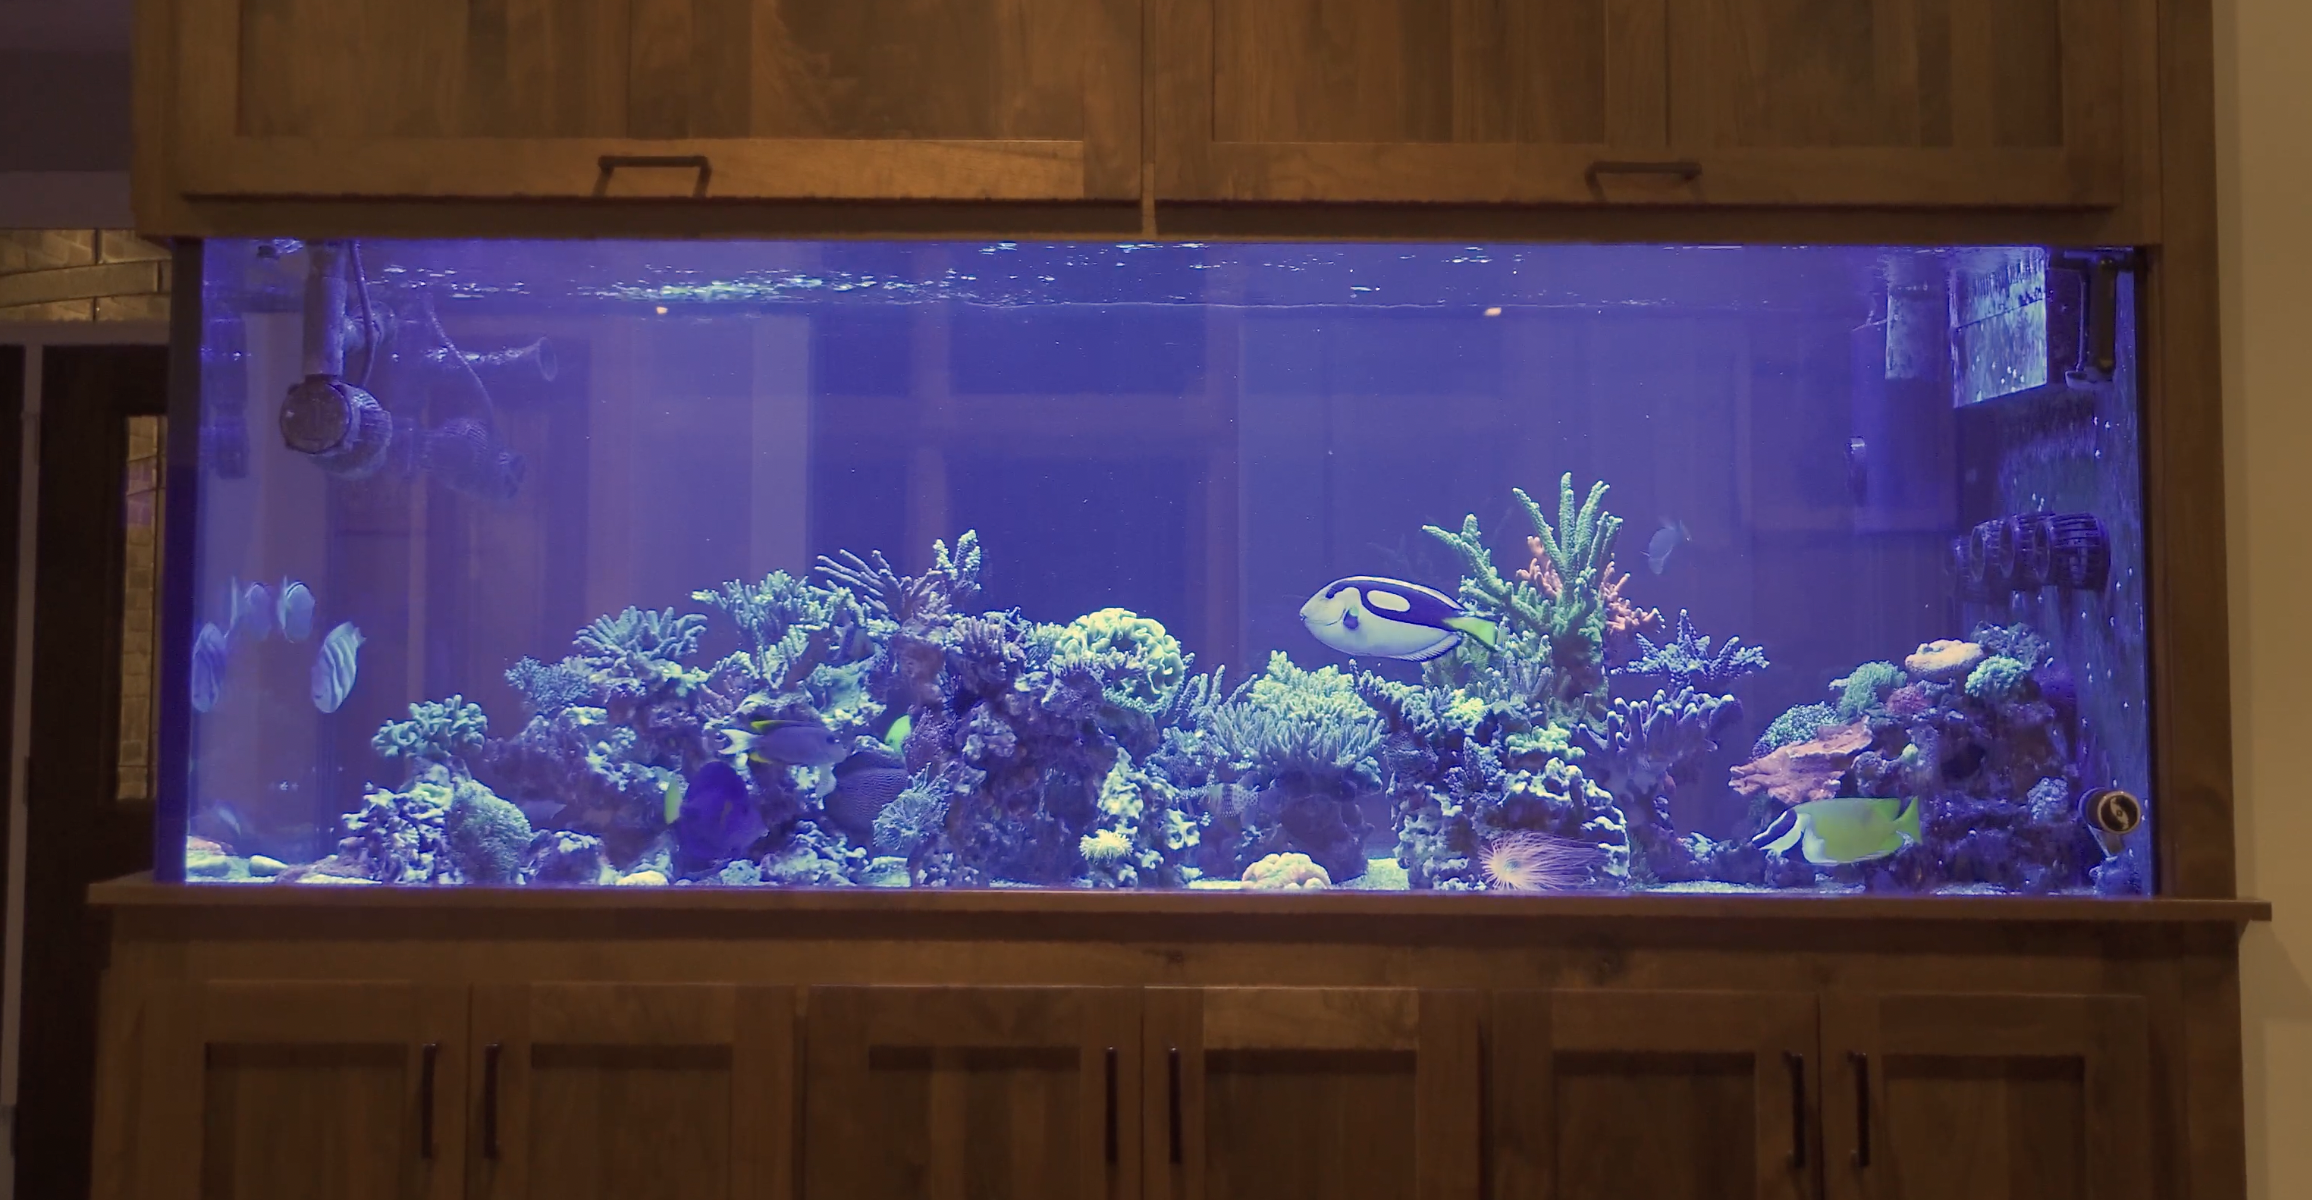 Doug's Perfectly Designed Fish Room & Stunning Custom Reef Tank